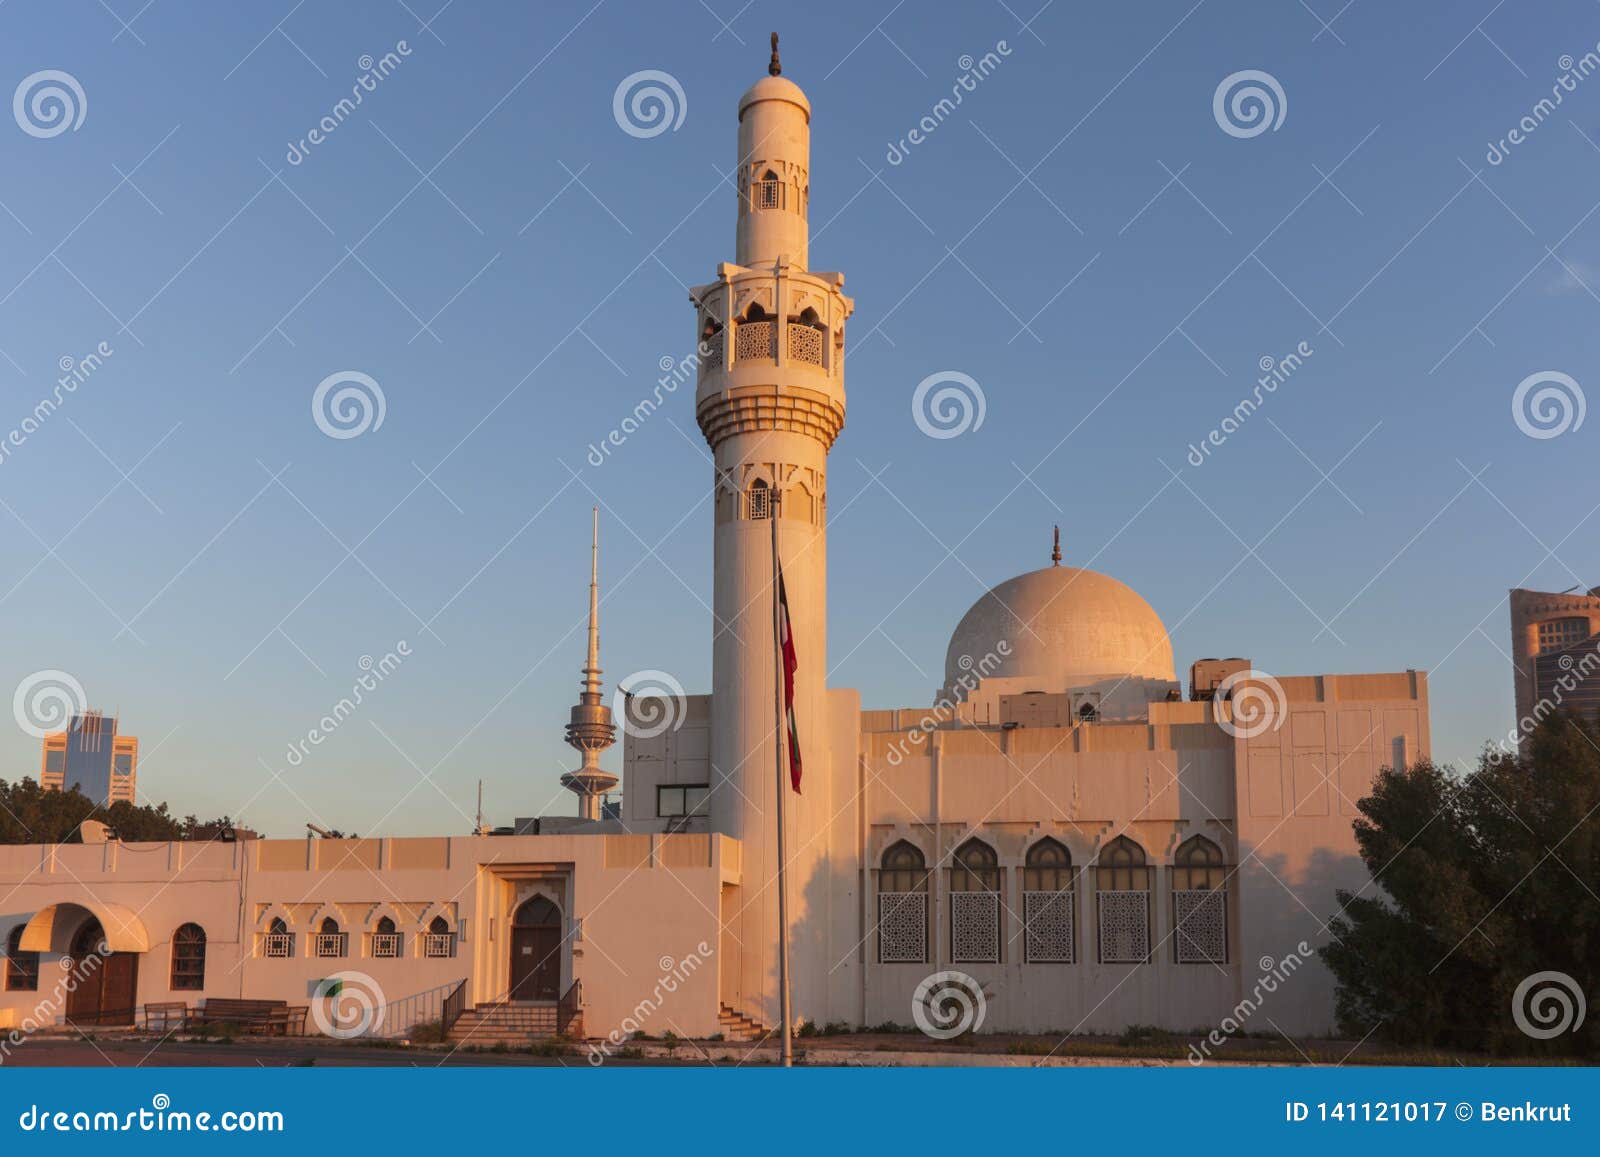 abdulaziz al othman mosque in kuwait city